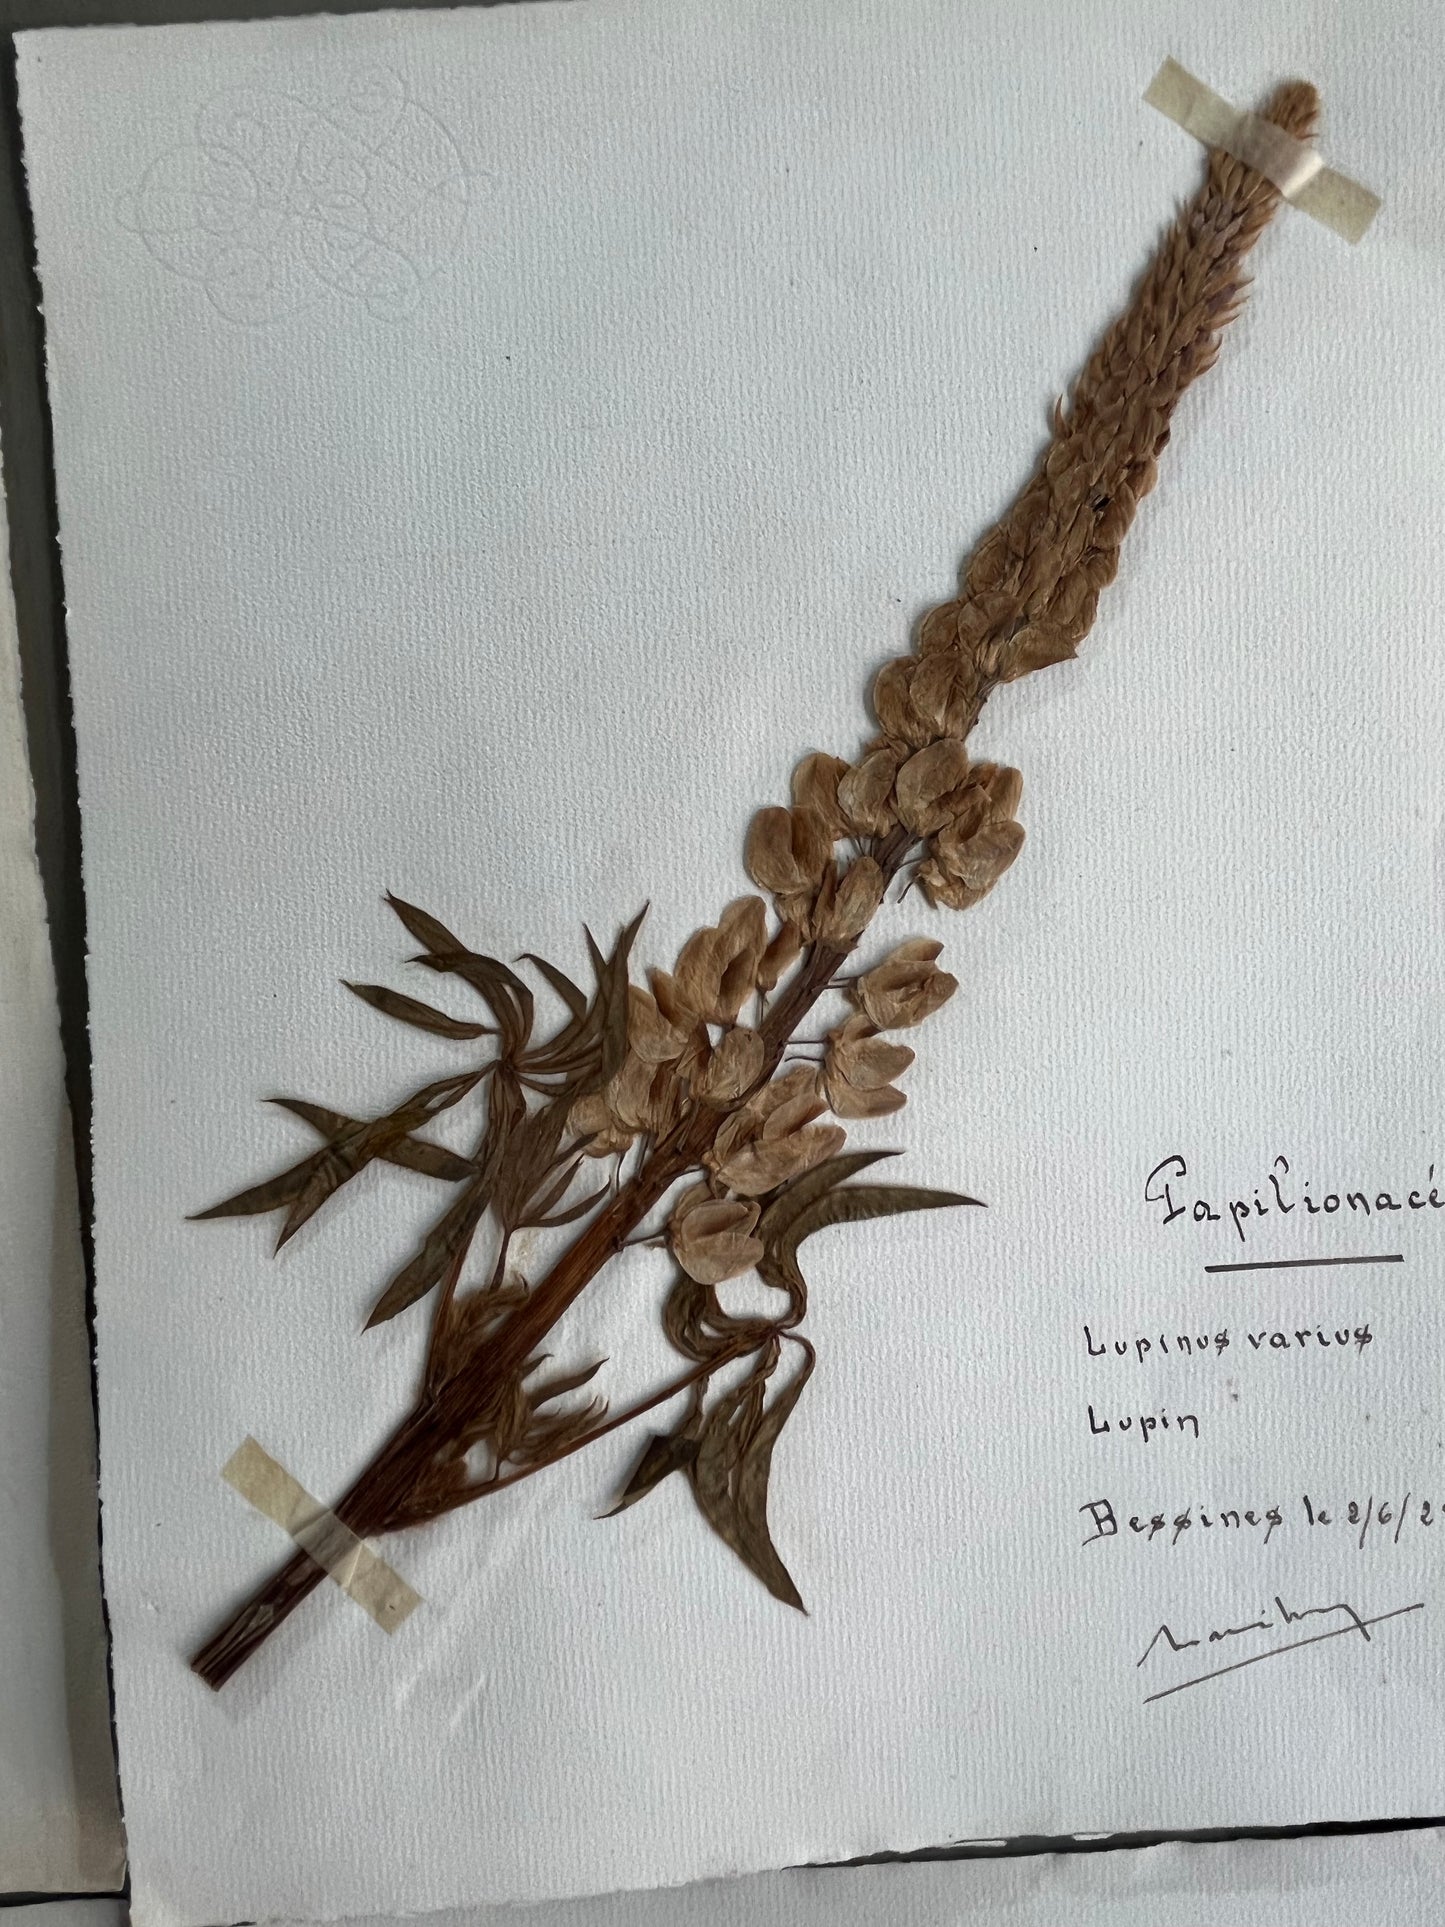 Set 6 botanical specimens